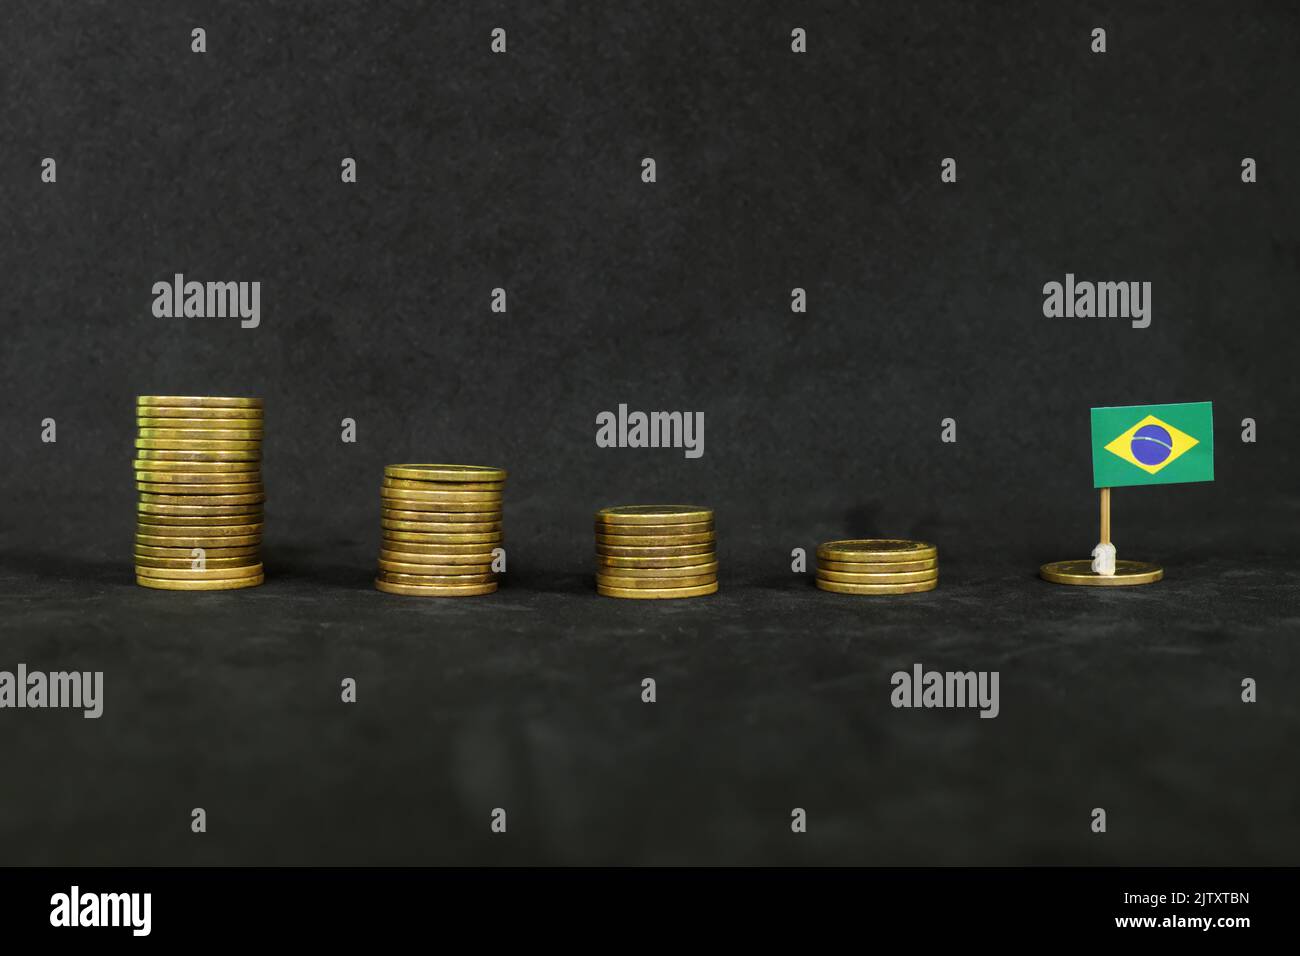 Brazil economic recession, financial crisis and peso depreciation concept. Brazilian flag in decreasing stack of coins in dark black background. Stock Photo